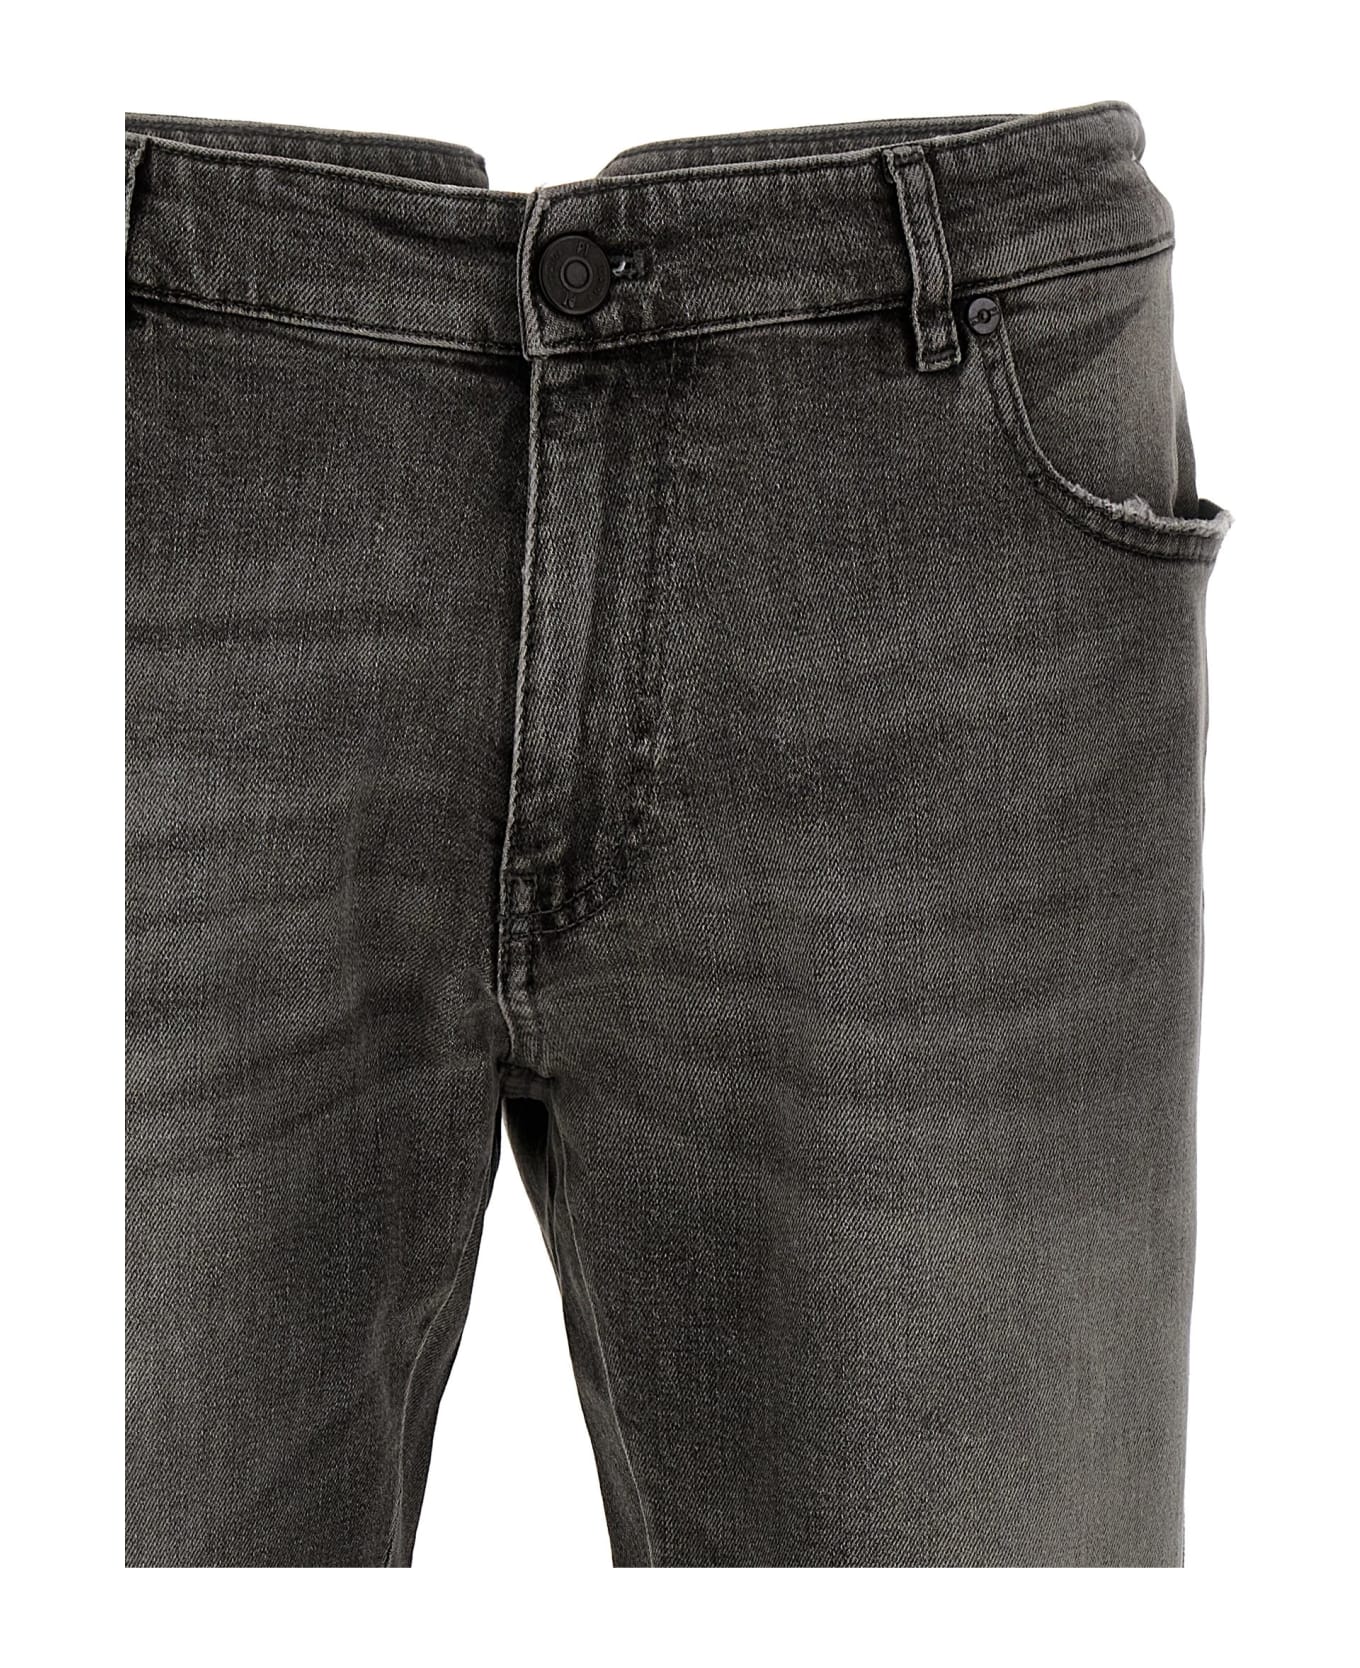 PT Torino 'rock Skinny' Jeans - Gray